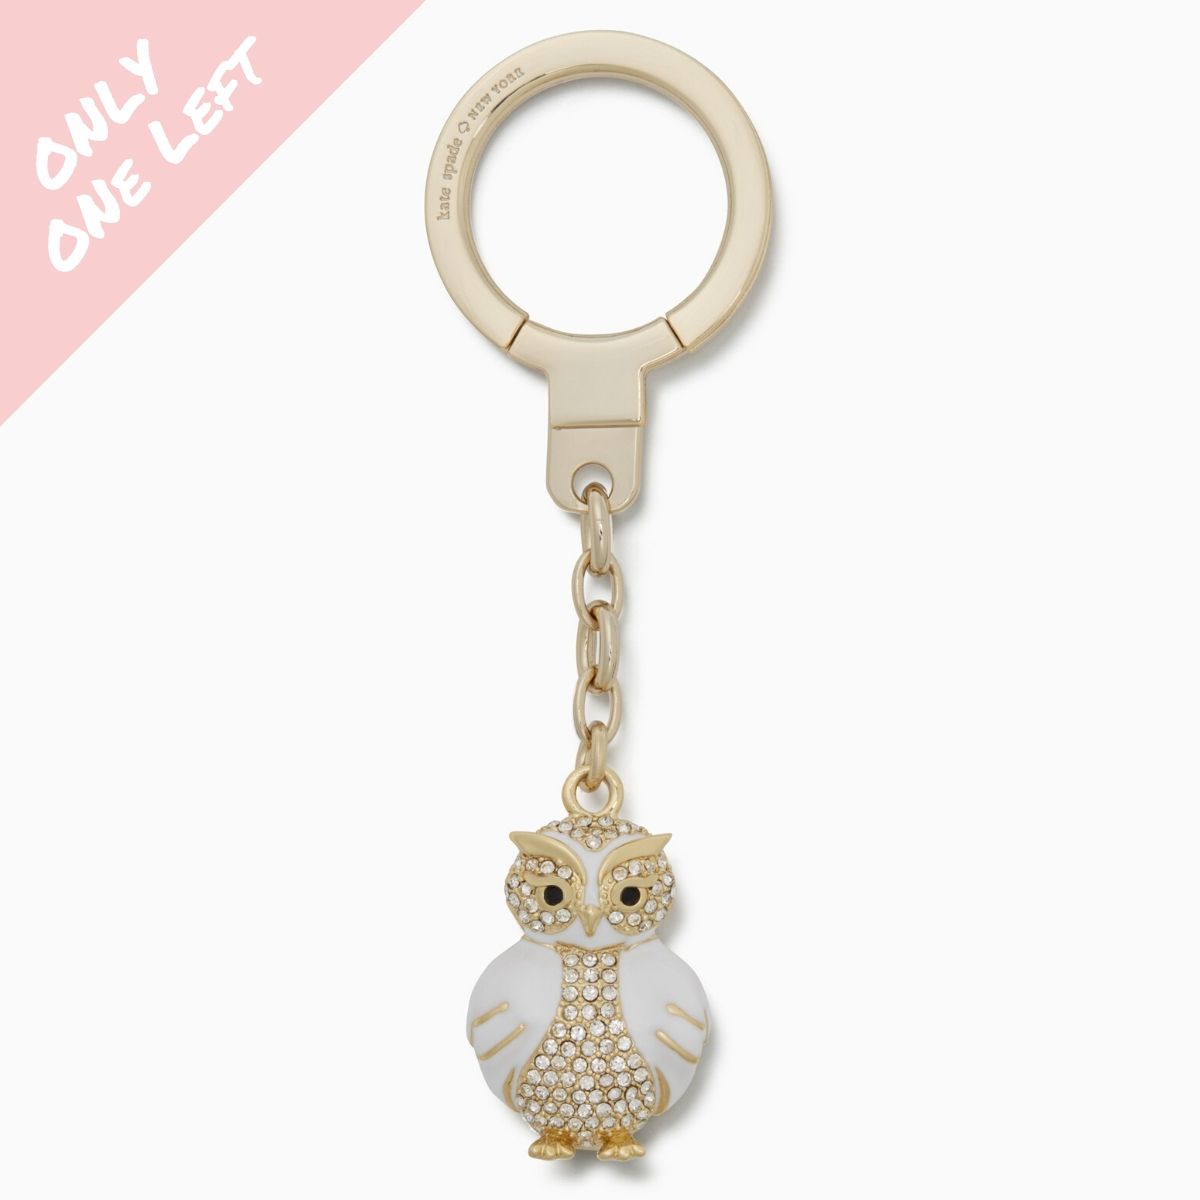 NWT Kate Spade New York Owl Furry Bag Charm Key Chain Fob $89